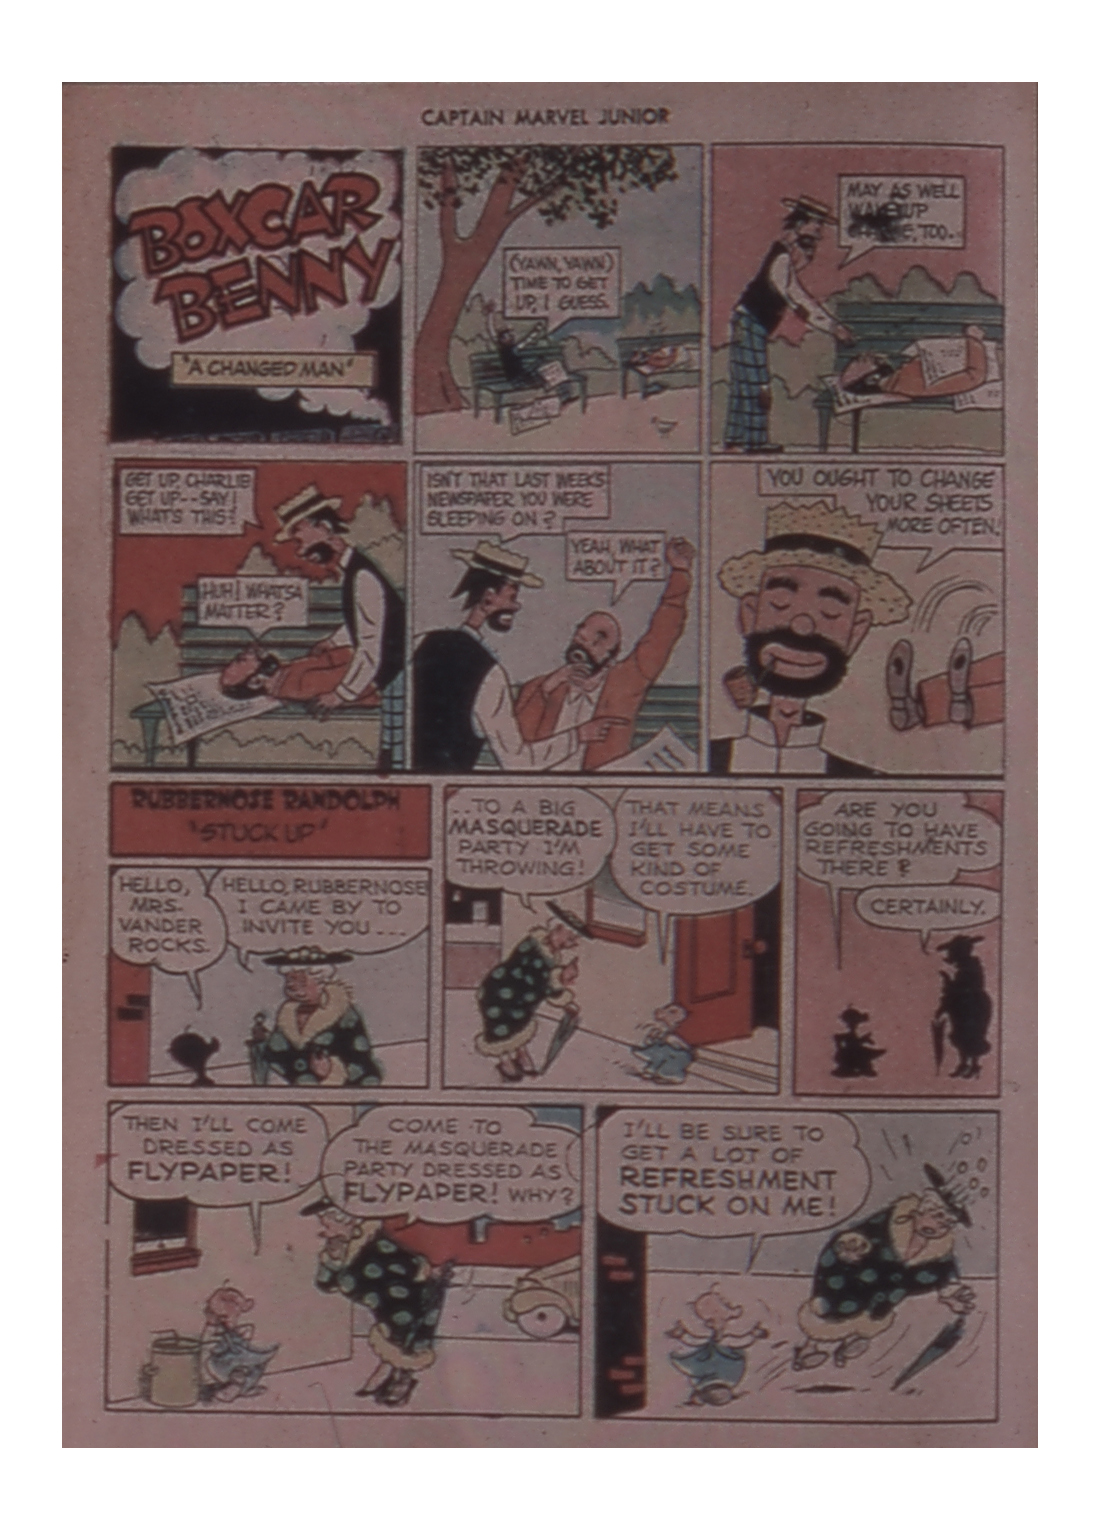 Read online Captain Marvel, Jr. comic -  Issue #57 - 14